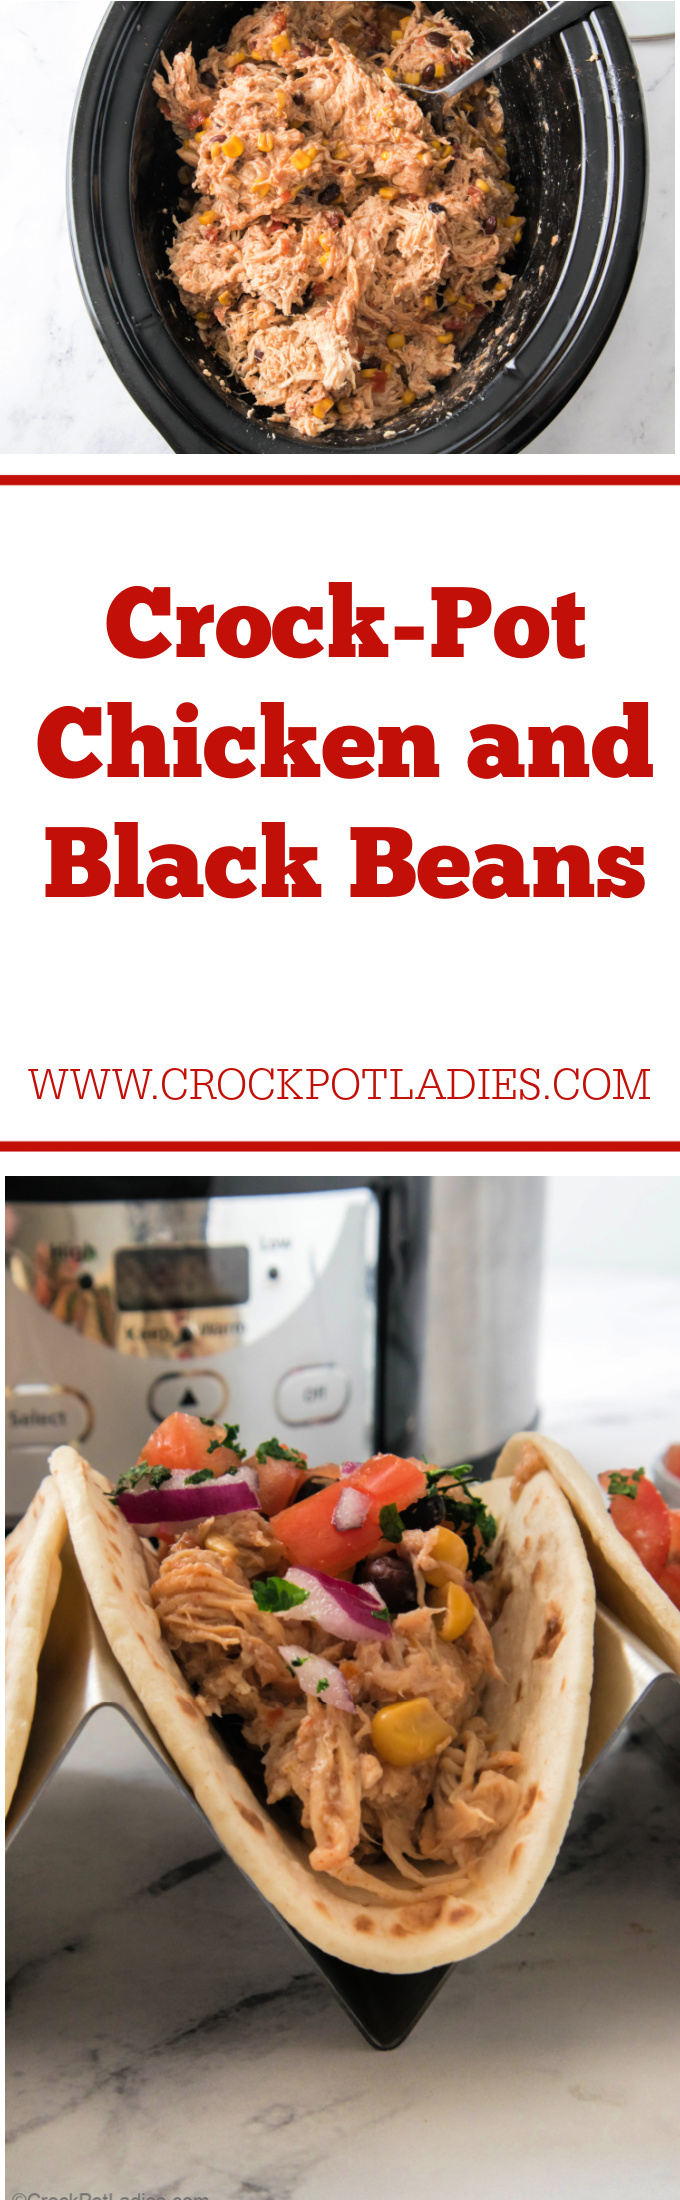 Crock-Pot Chicken and Black Beans